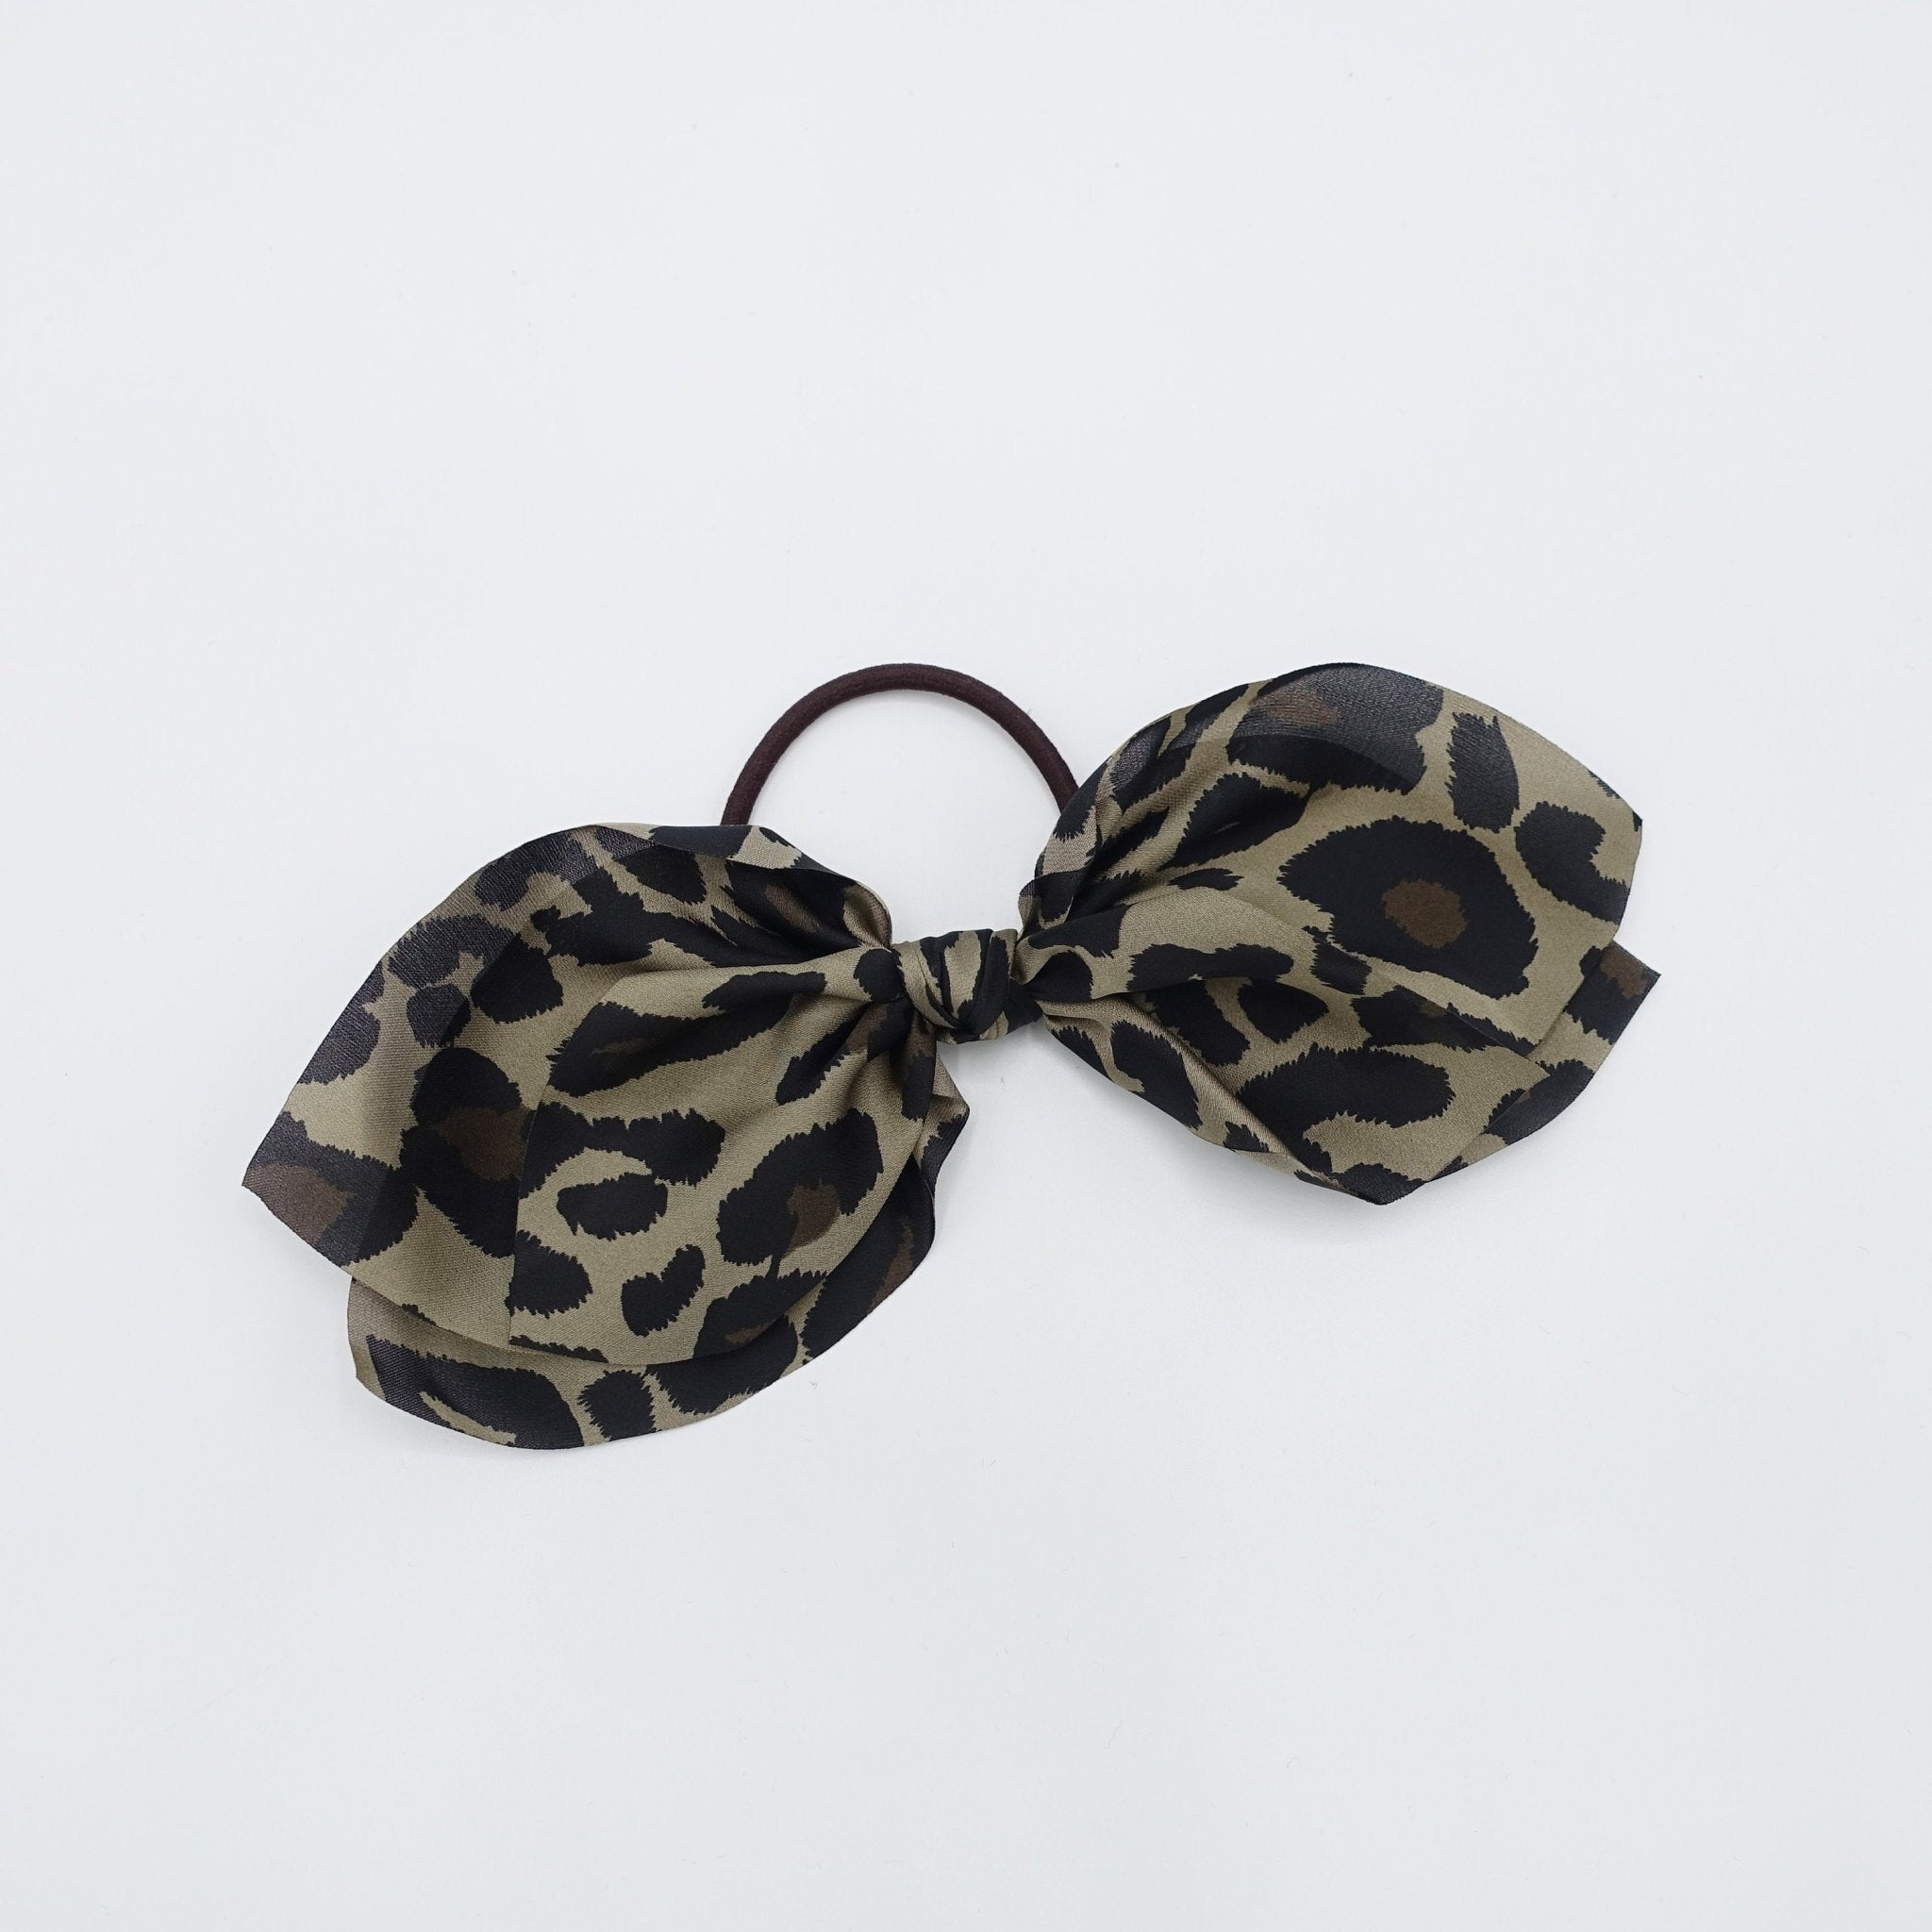 VeryShine scrunchies/hair holder animal print chiffon bow knot hair elastic women leopard python print ponytail holder